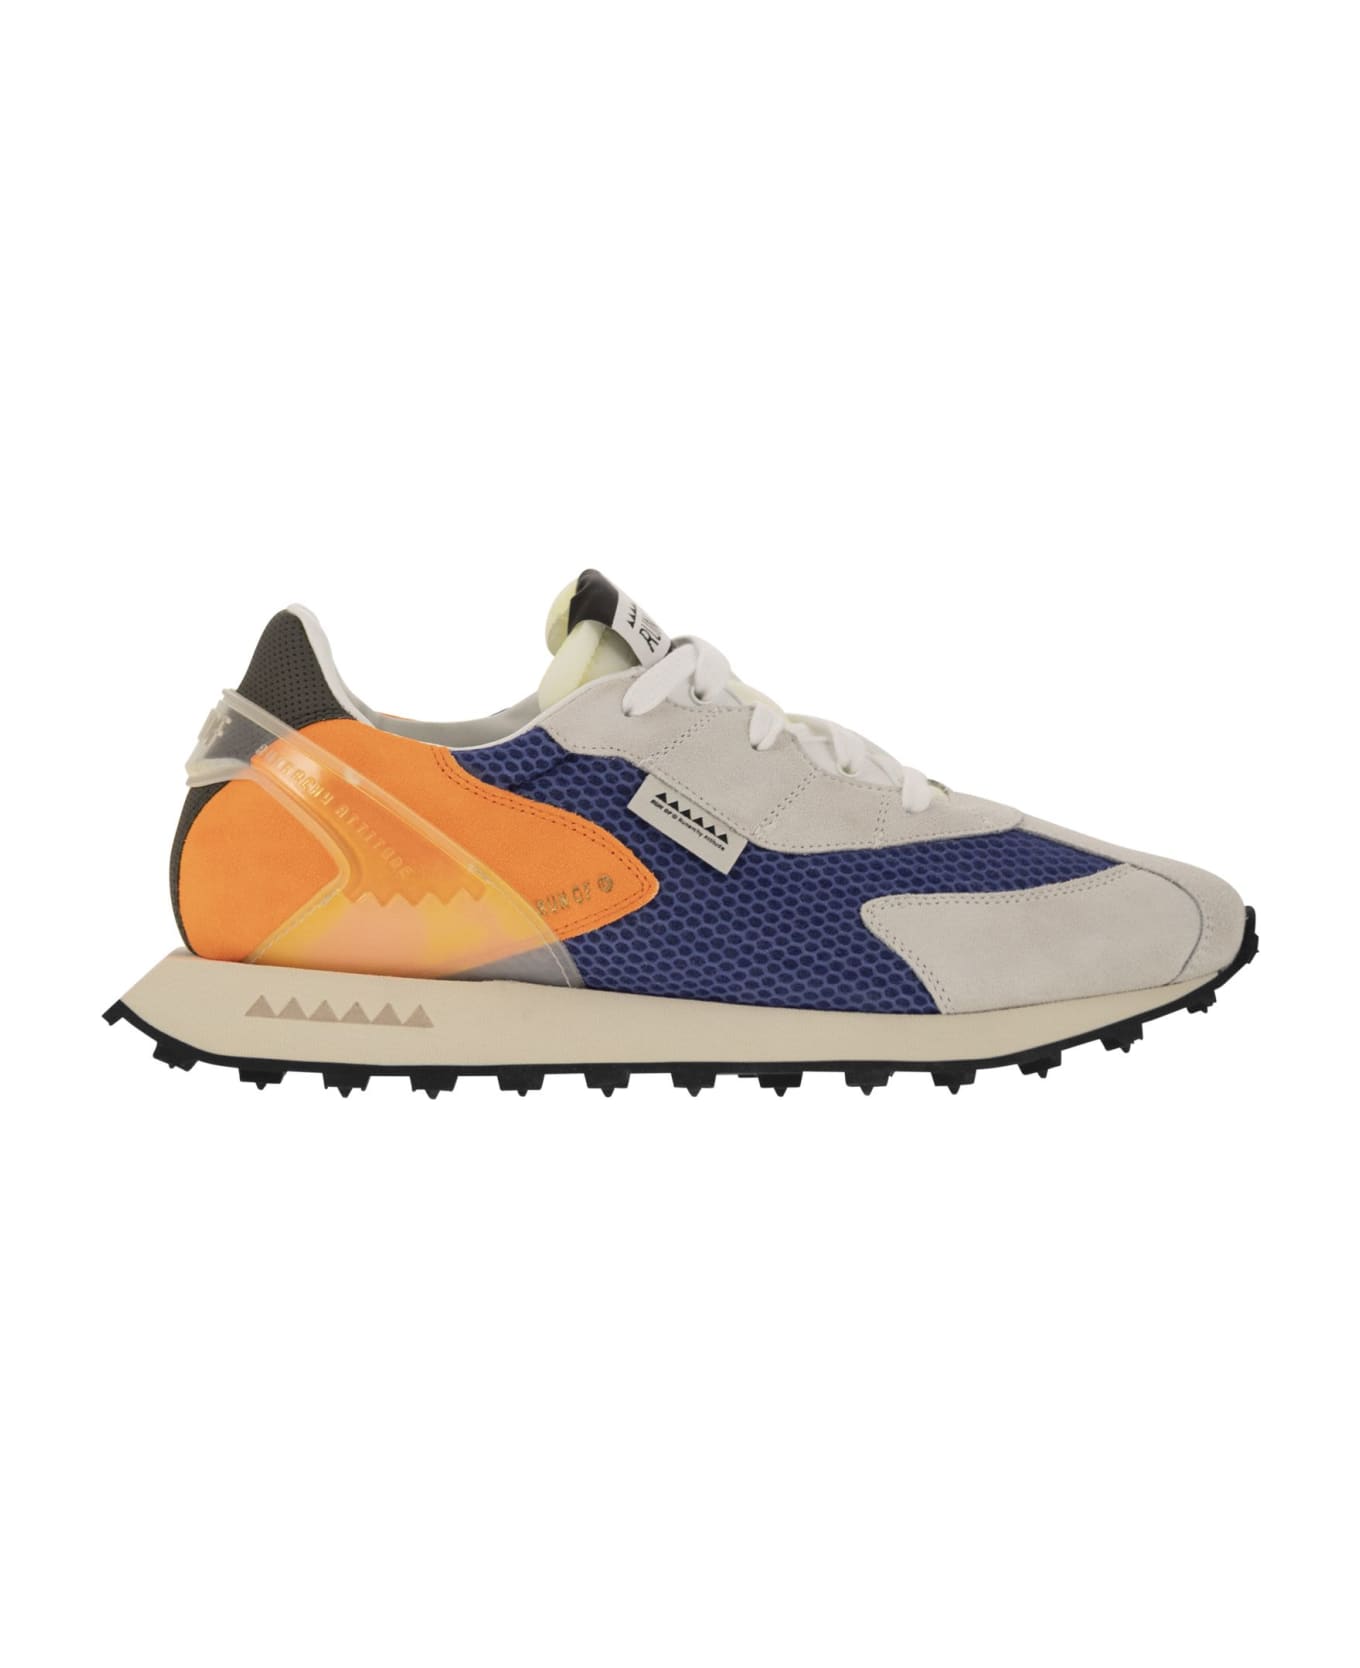 RUN OF Piuma - Sneakers - Blu/orange